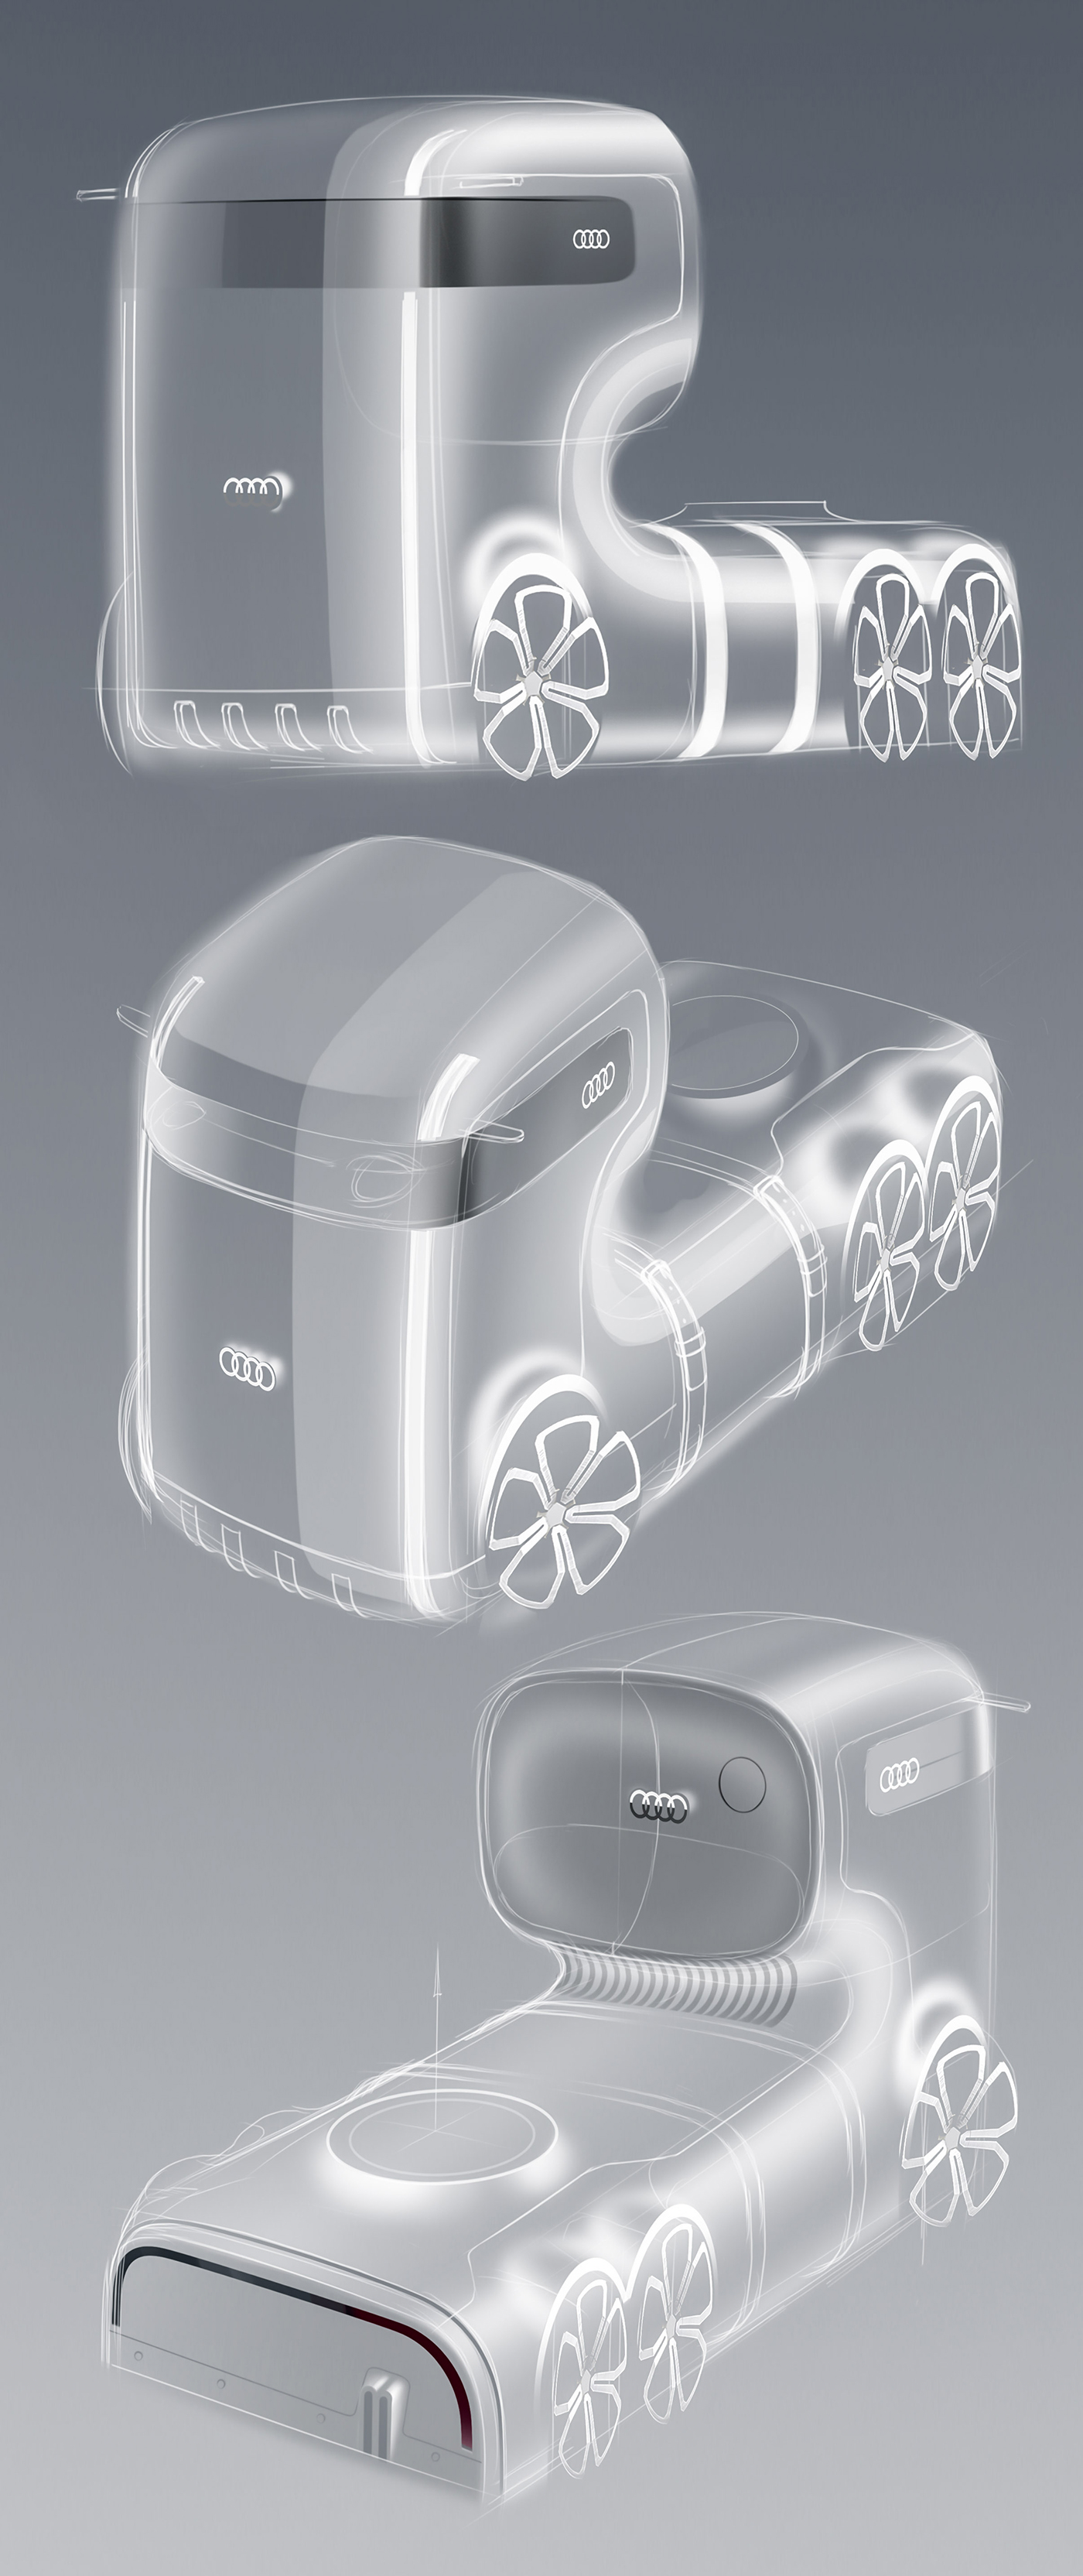 Audi Truck auditruck truckforaudi cardesign sketch carsketch draw conceptcar sketchcar paint doodle Audiconcept automotive  